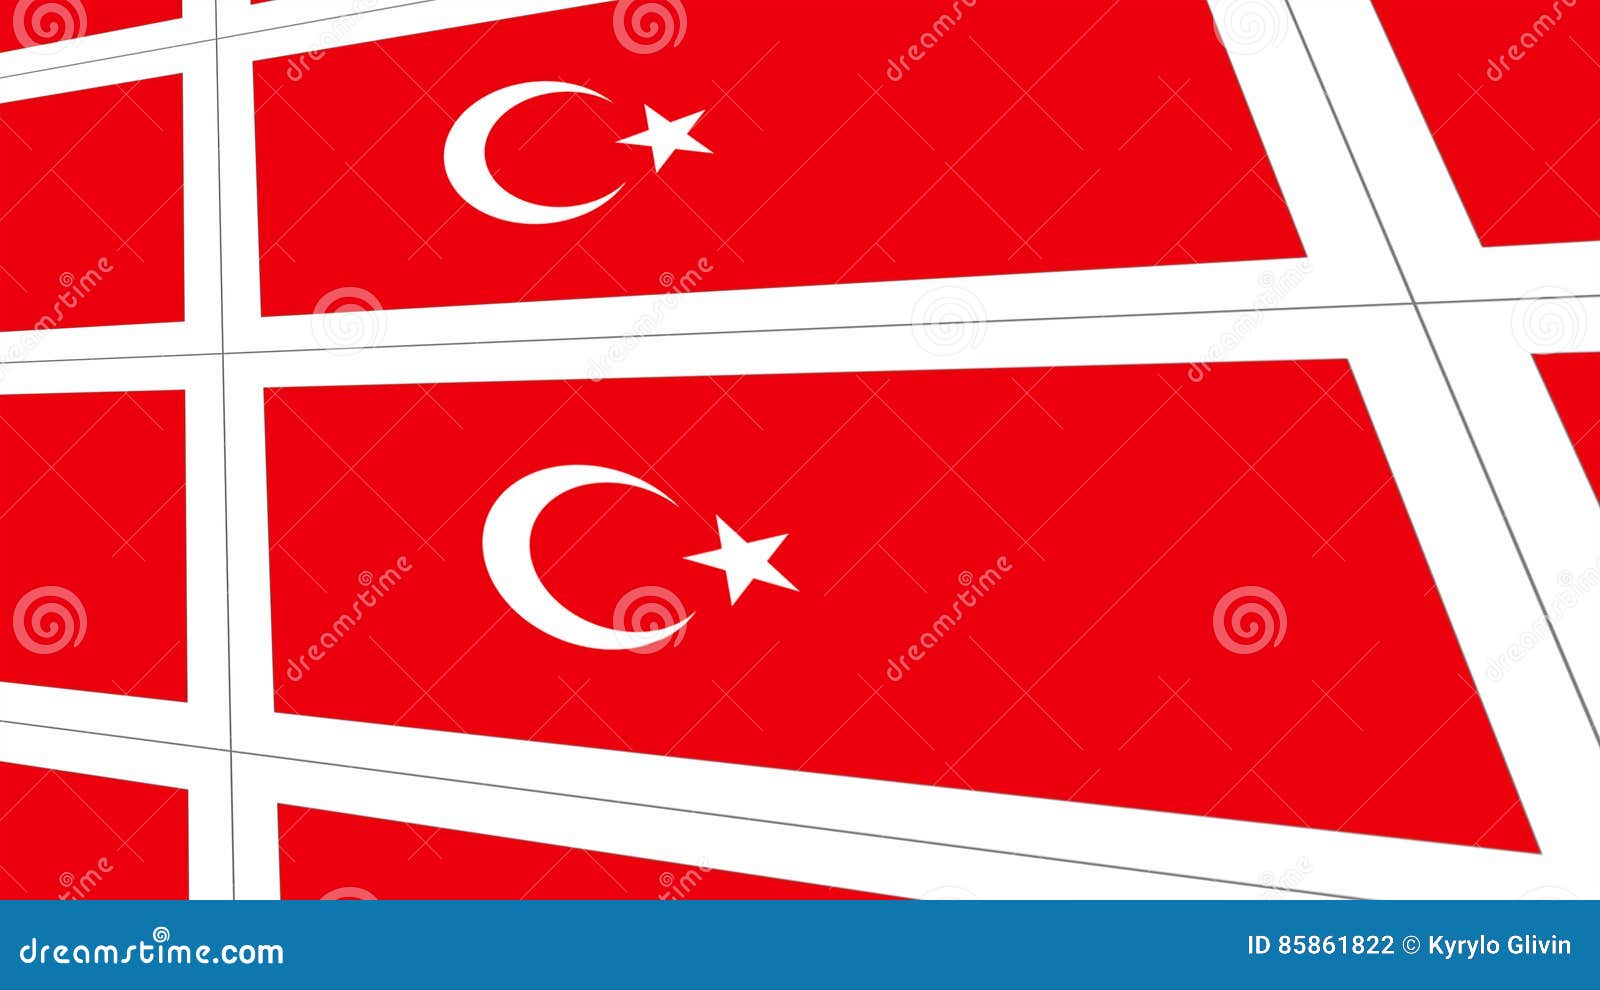 Сколько звезд на флаге турции. Турецкий флаг времен Ушакова. Флаг Турции при Наполеоне. Турецкий флаг 1775 год. География флаги Турция.